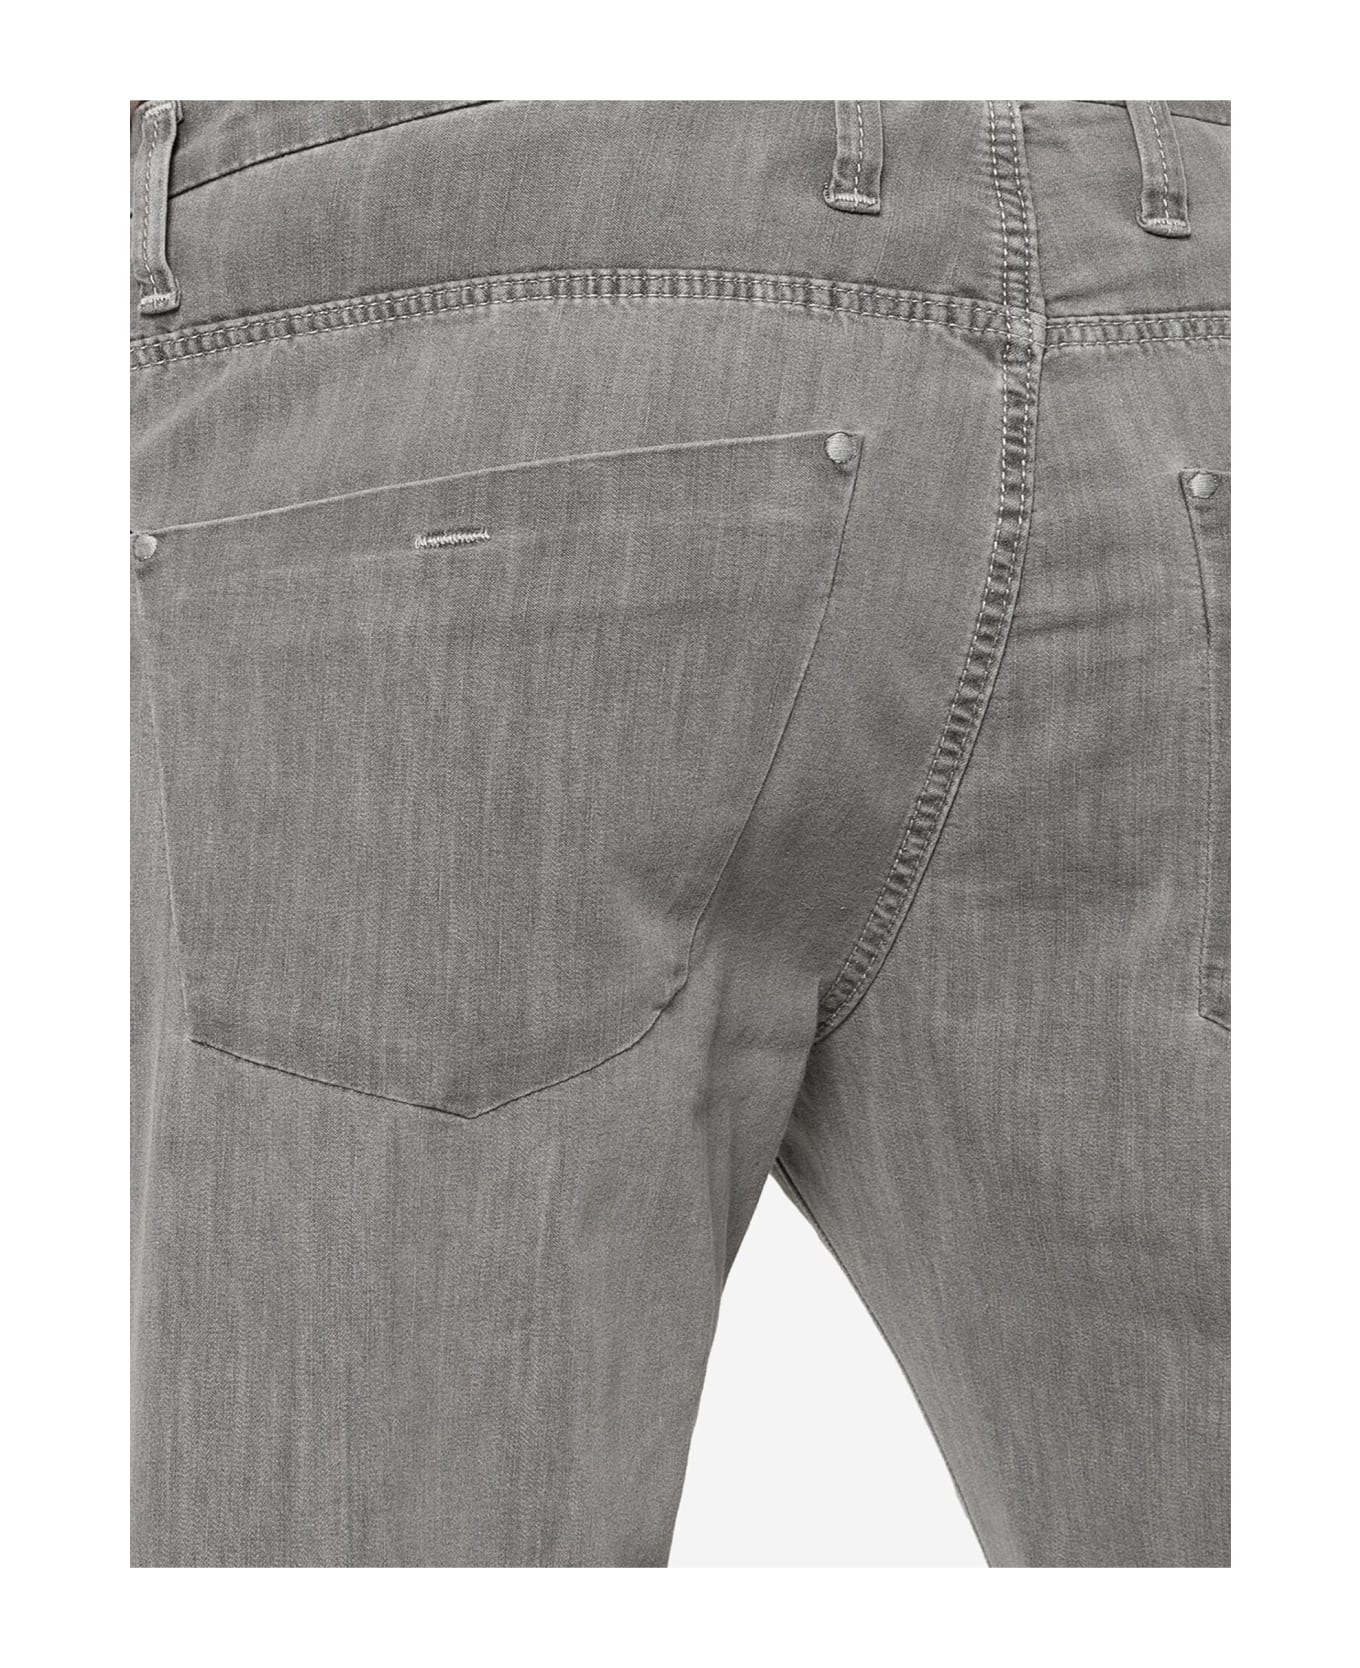 Incotex Medium Grey Cotton Blend Denim Jeans - Grey